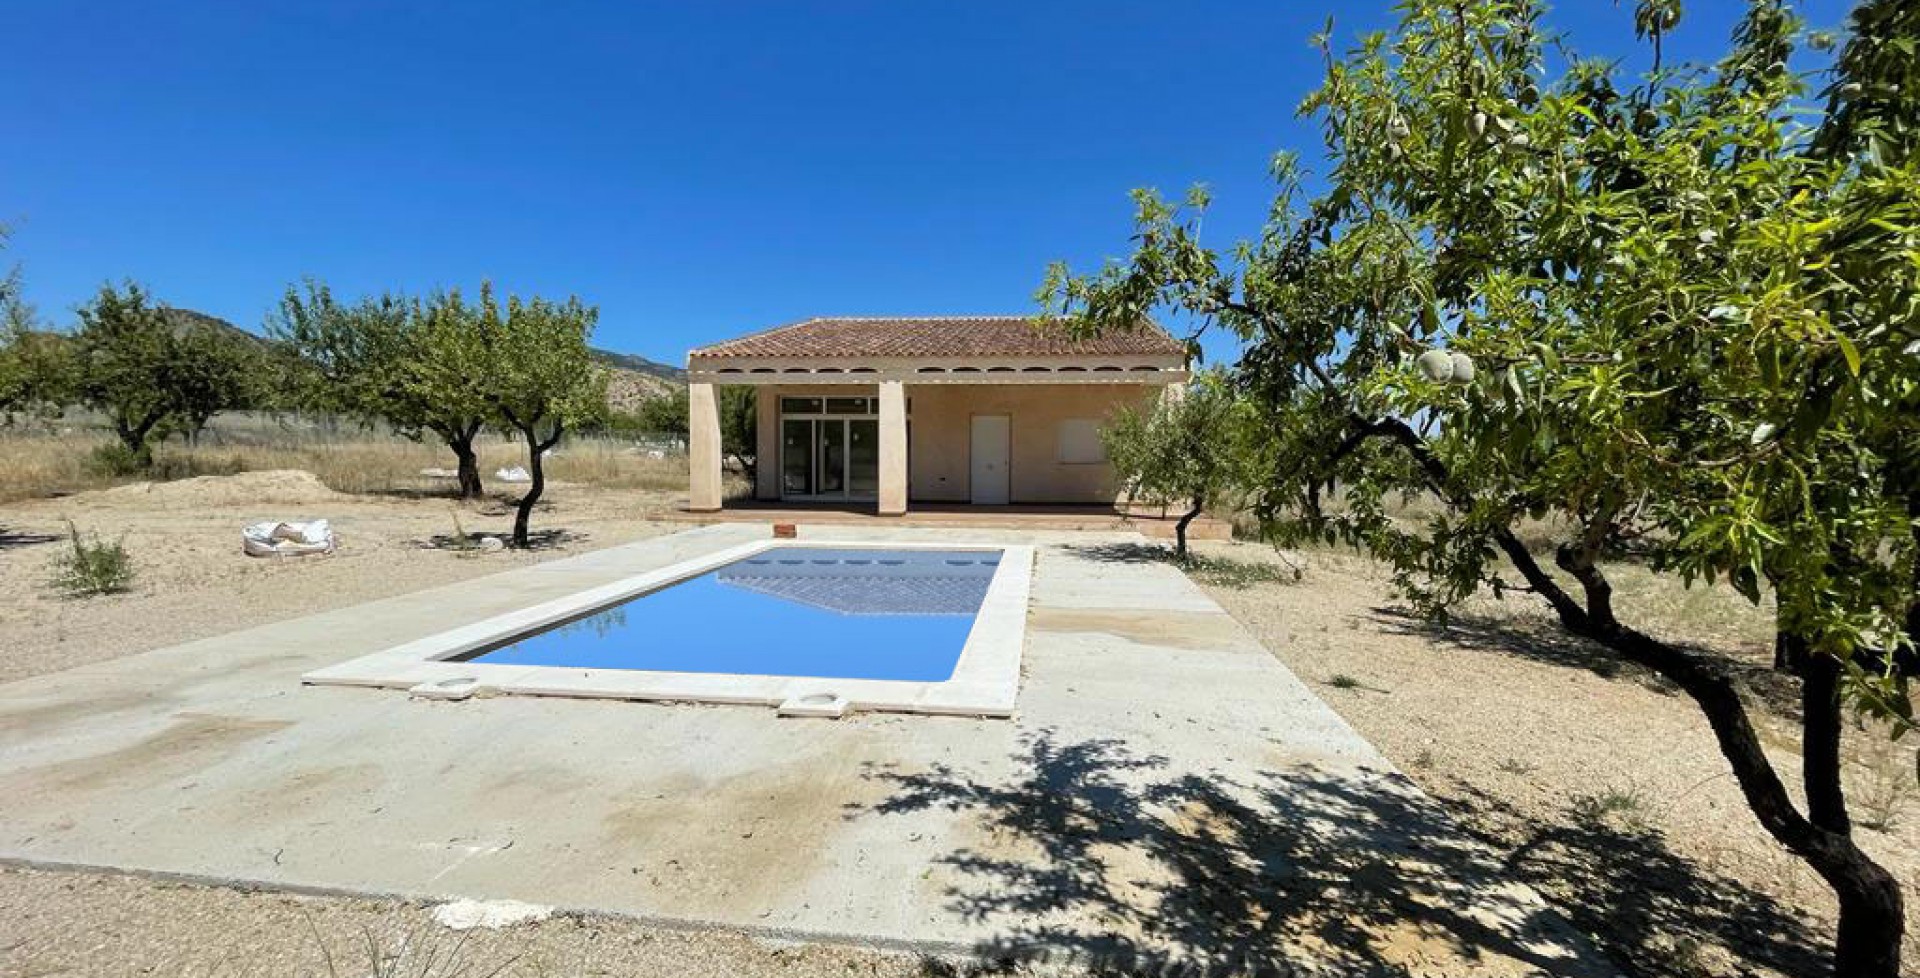 Recent new villa with amazing swimming pool, Ricote, Murcia, Spain